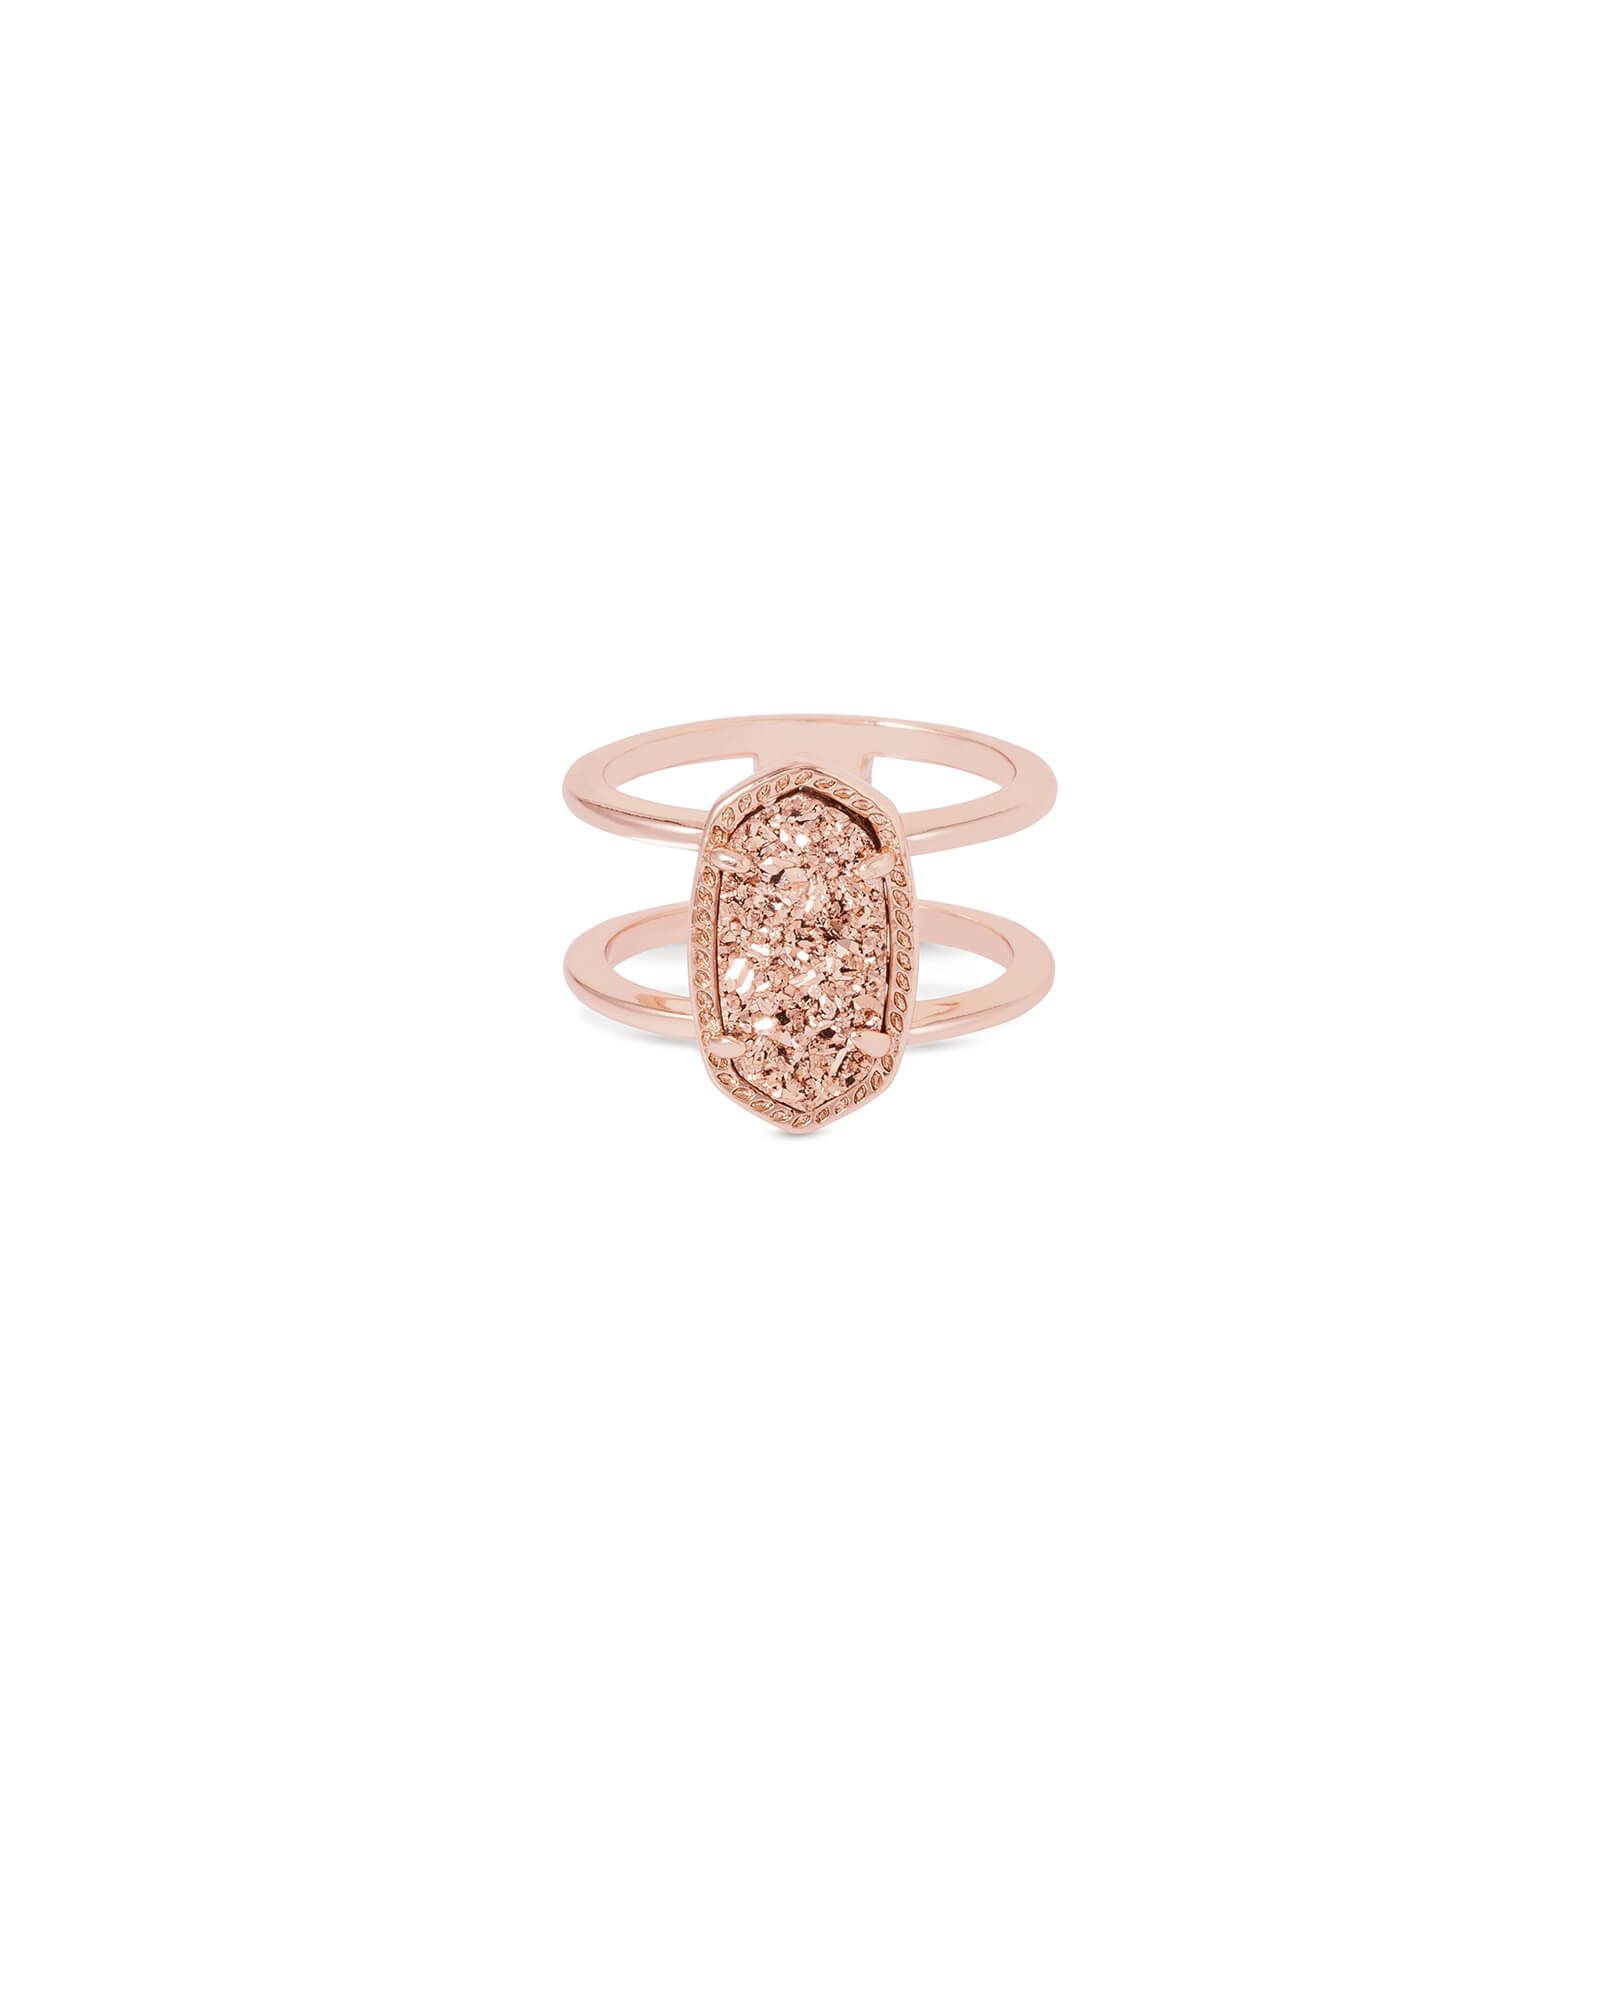 Elyse Ring in Rose Gold | Kendra Scott